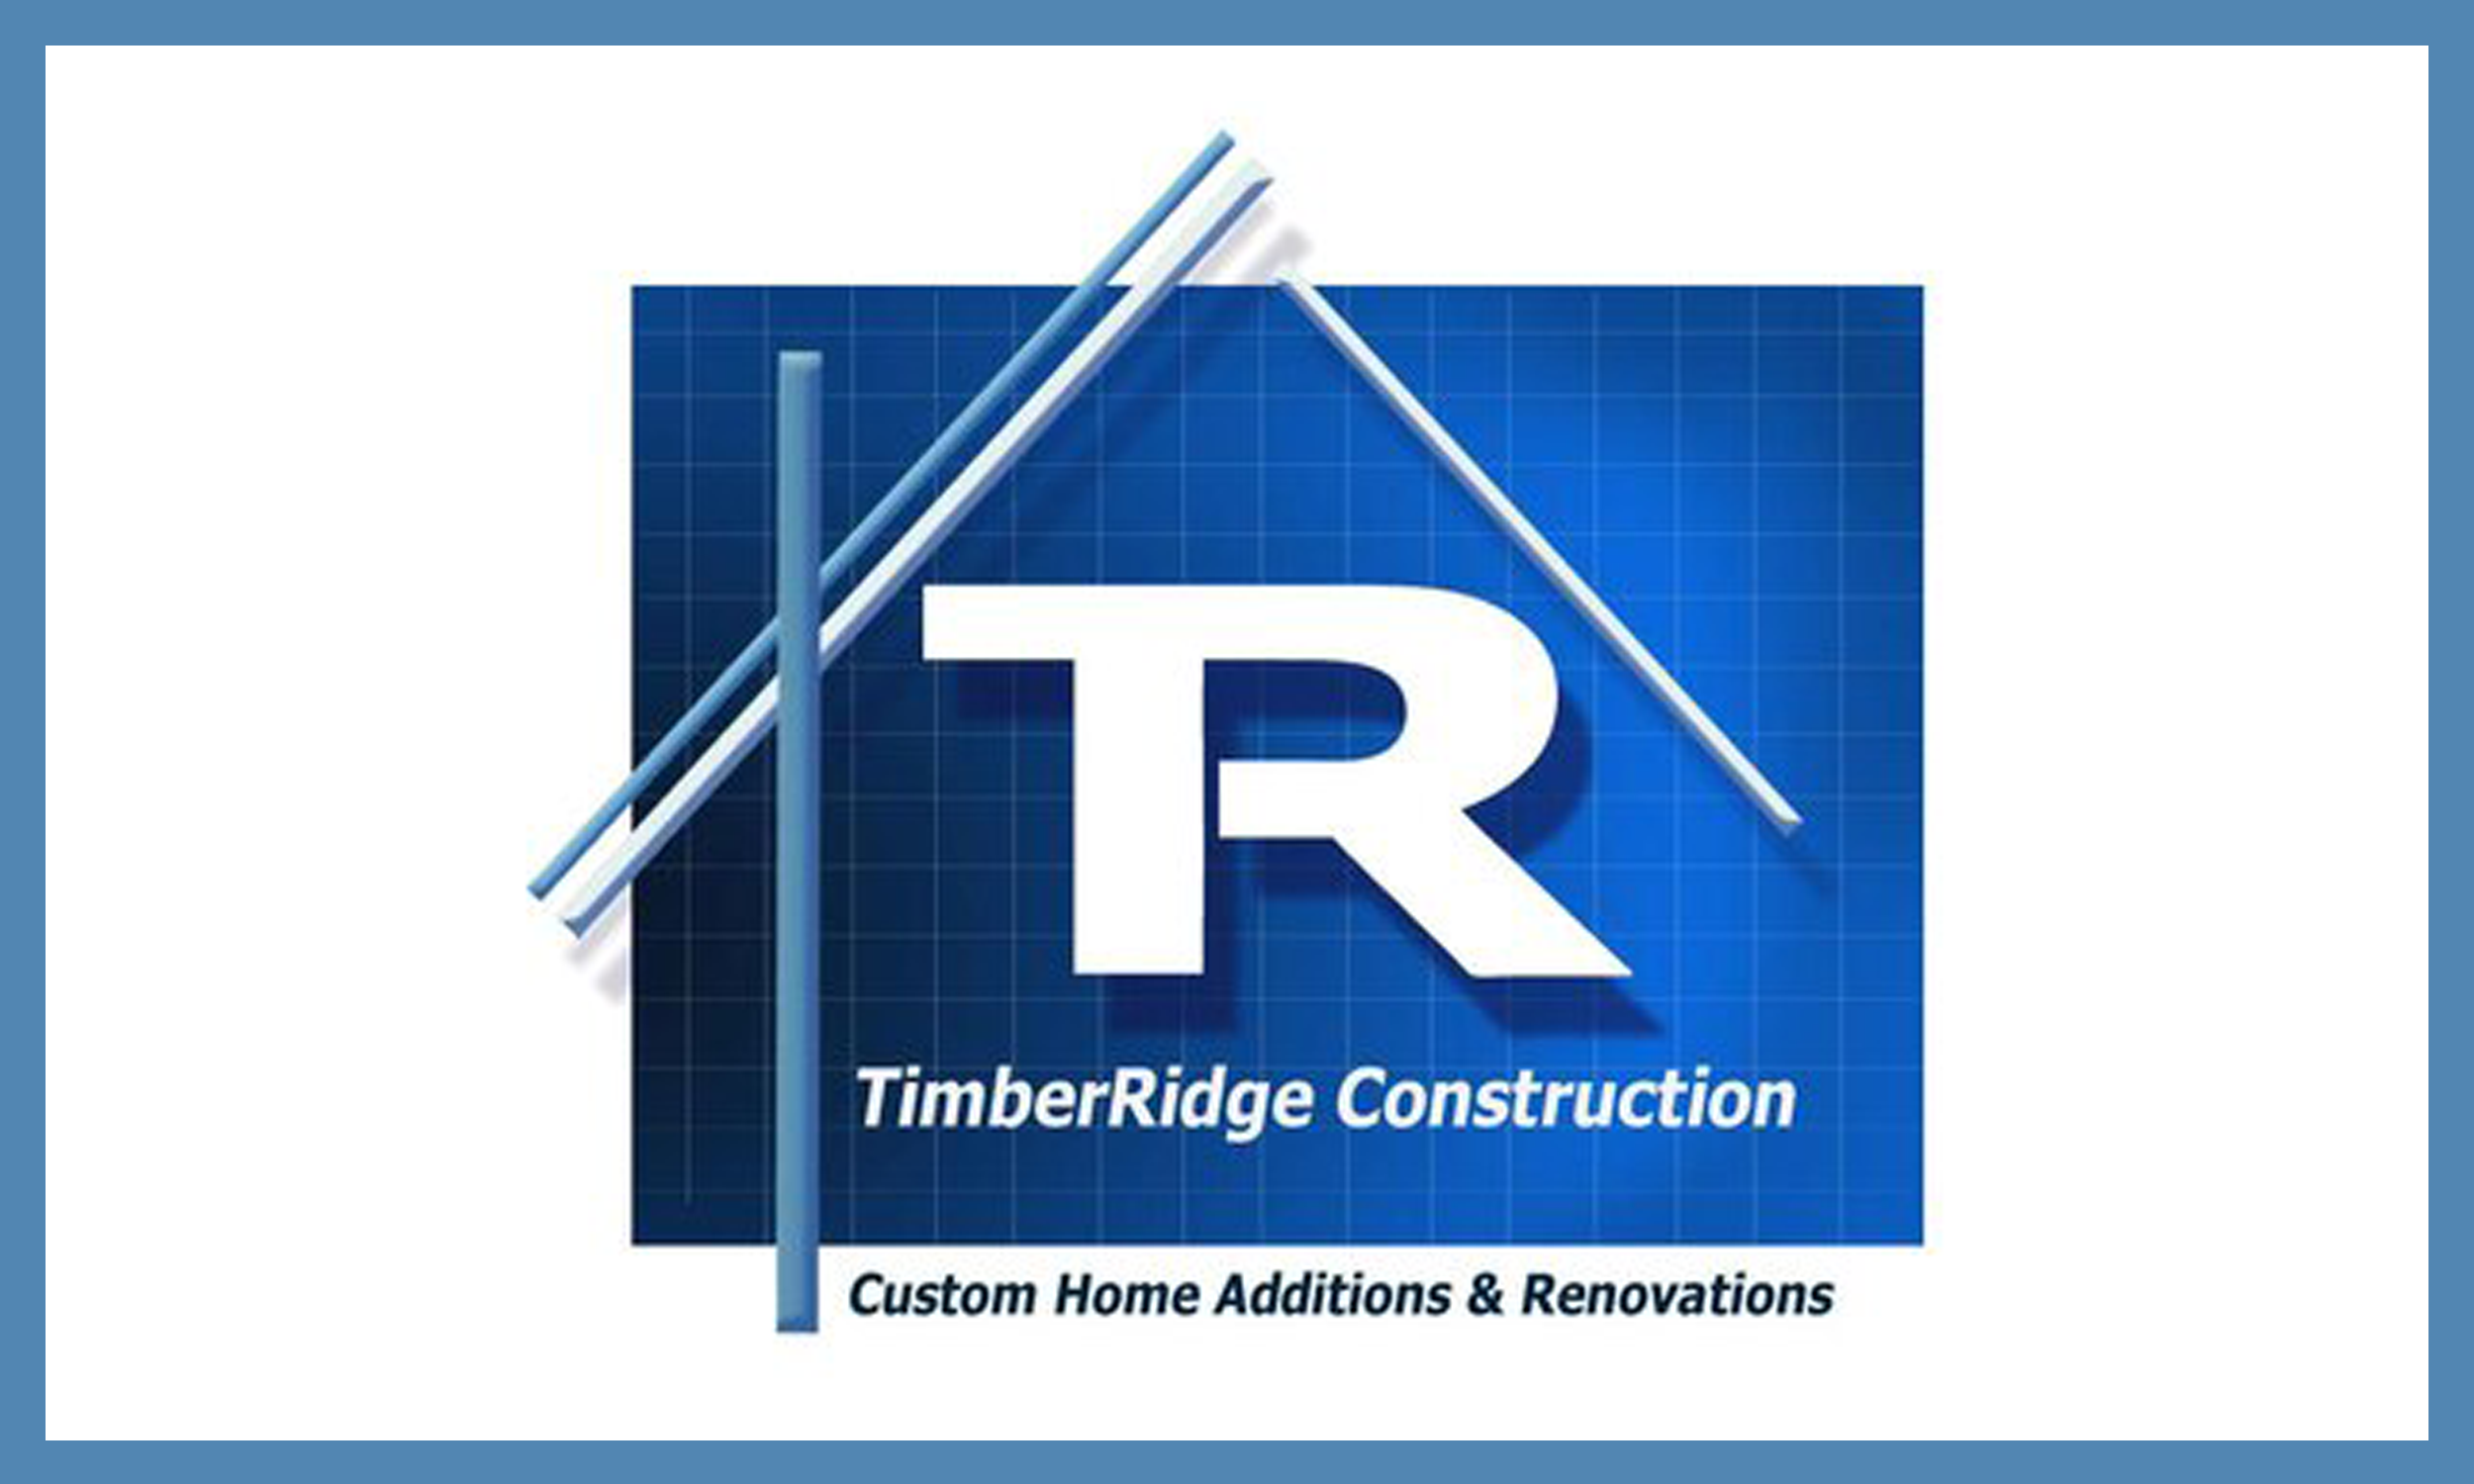 TimberRidge Construction